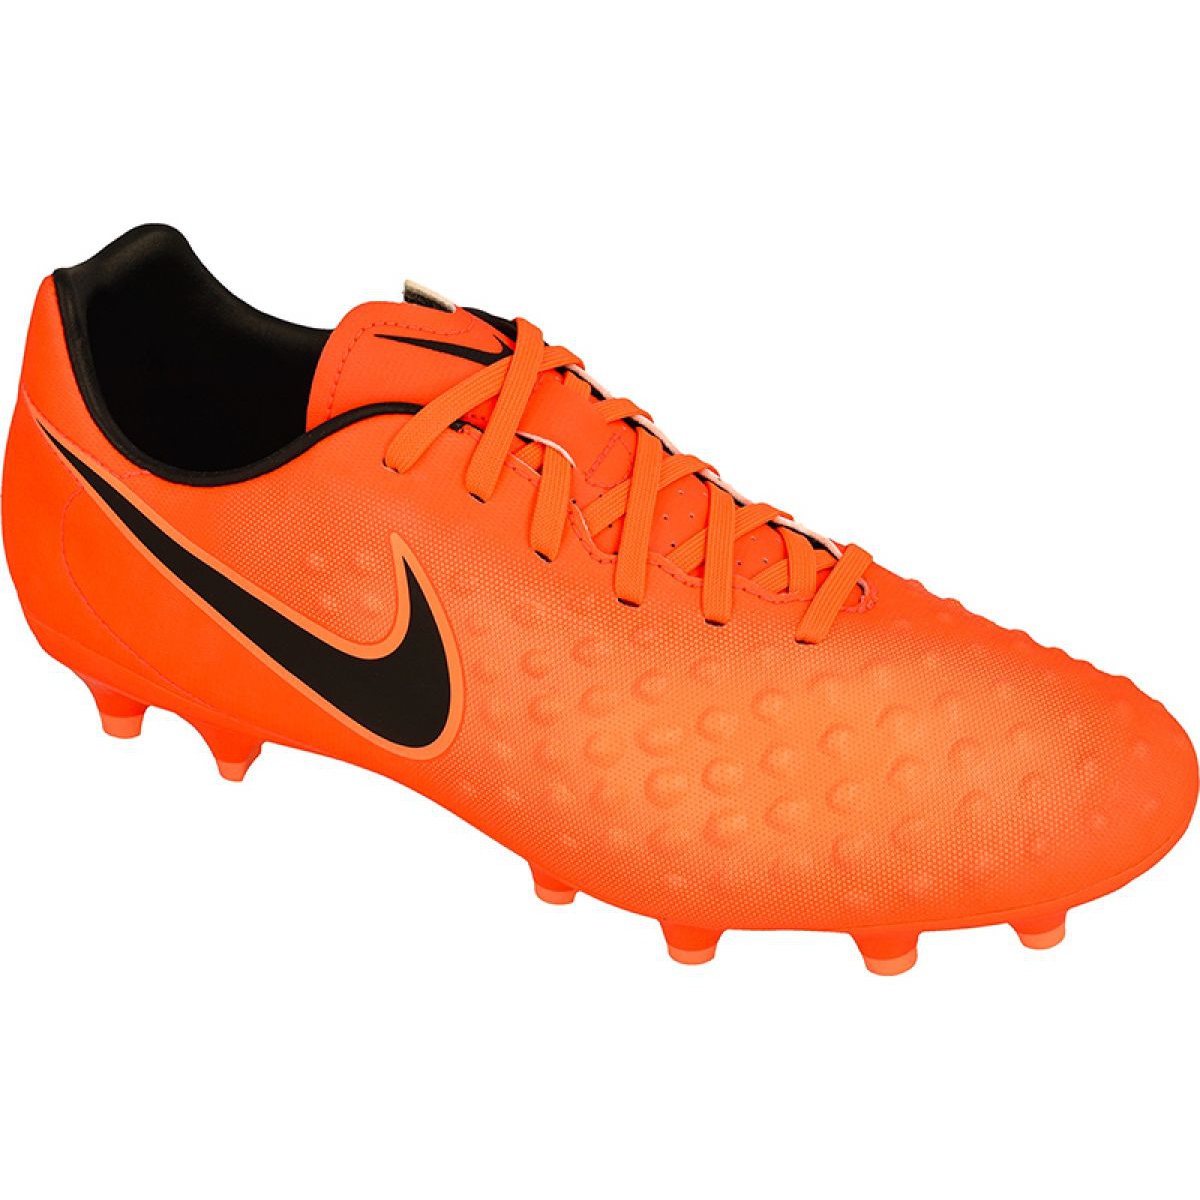 Síguenos esta noche etiqueta Nike Magista Onda Ii Fg M 844411-808 football shoes orange orange - KeeShoes